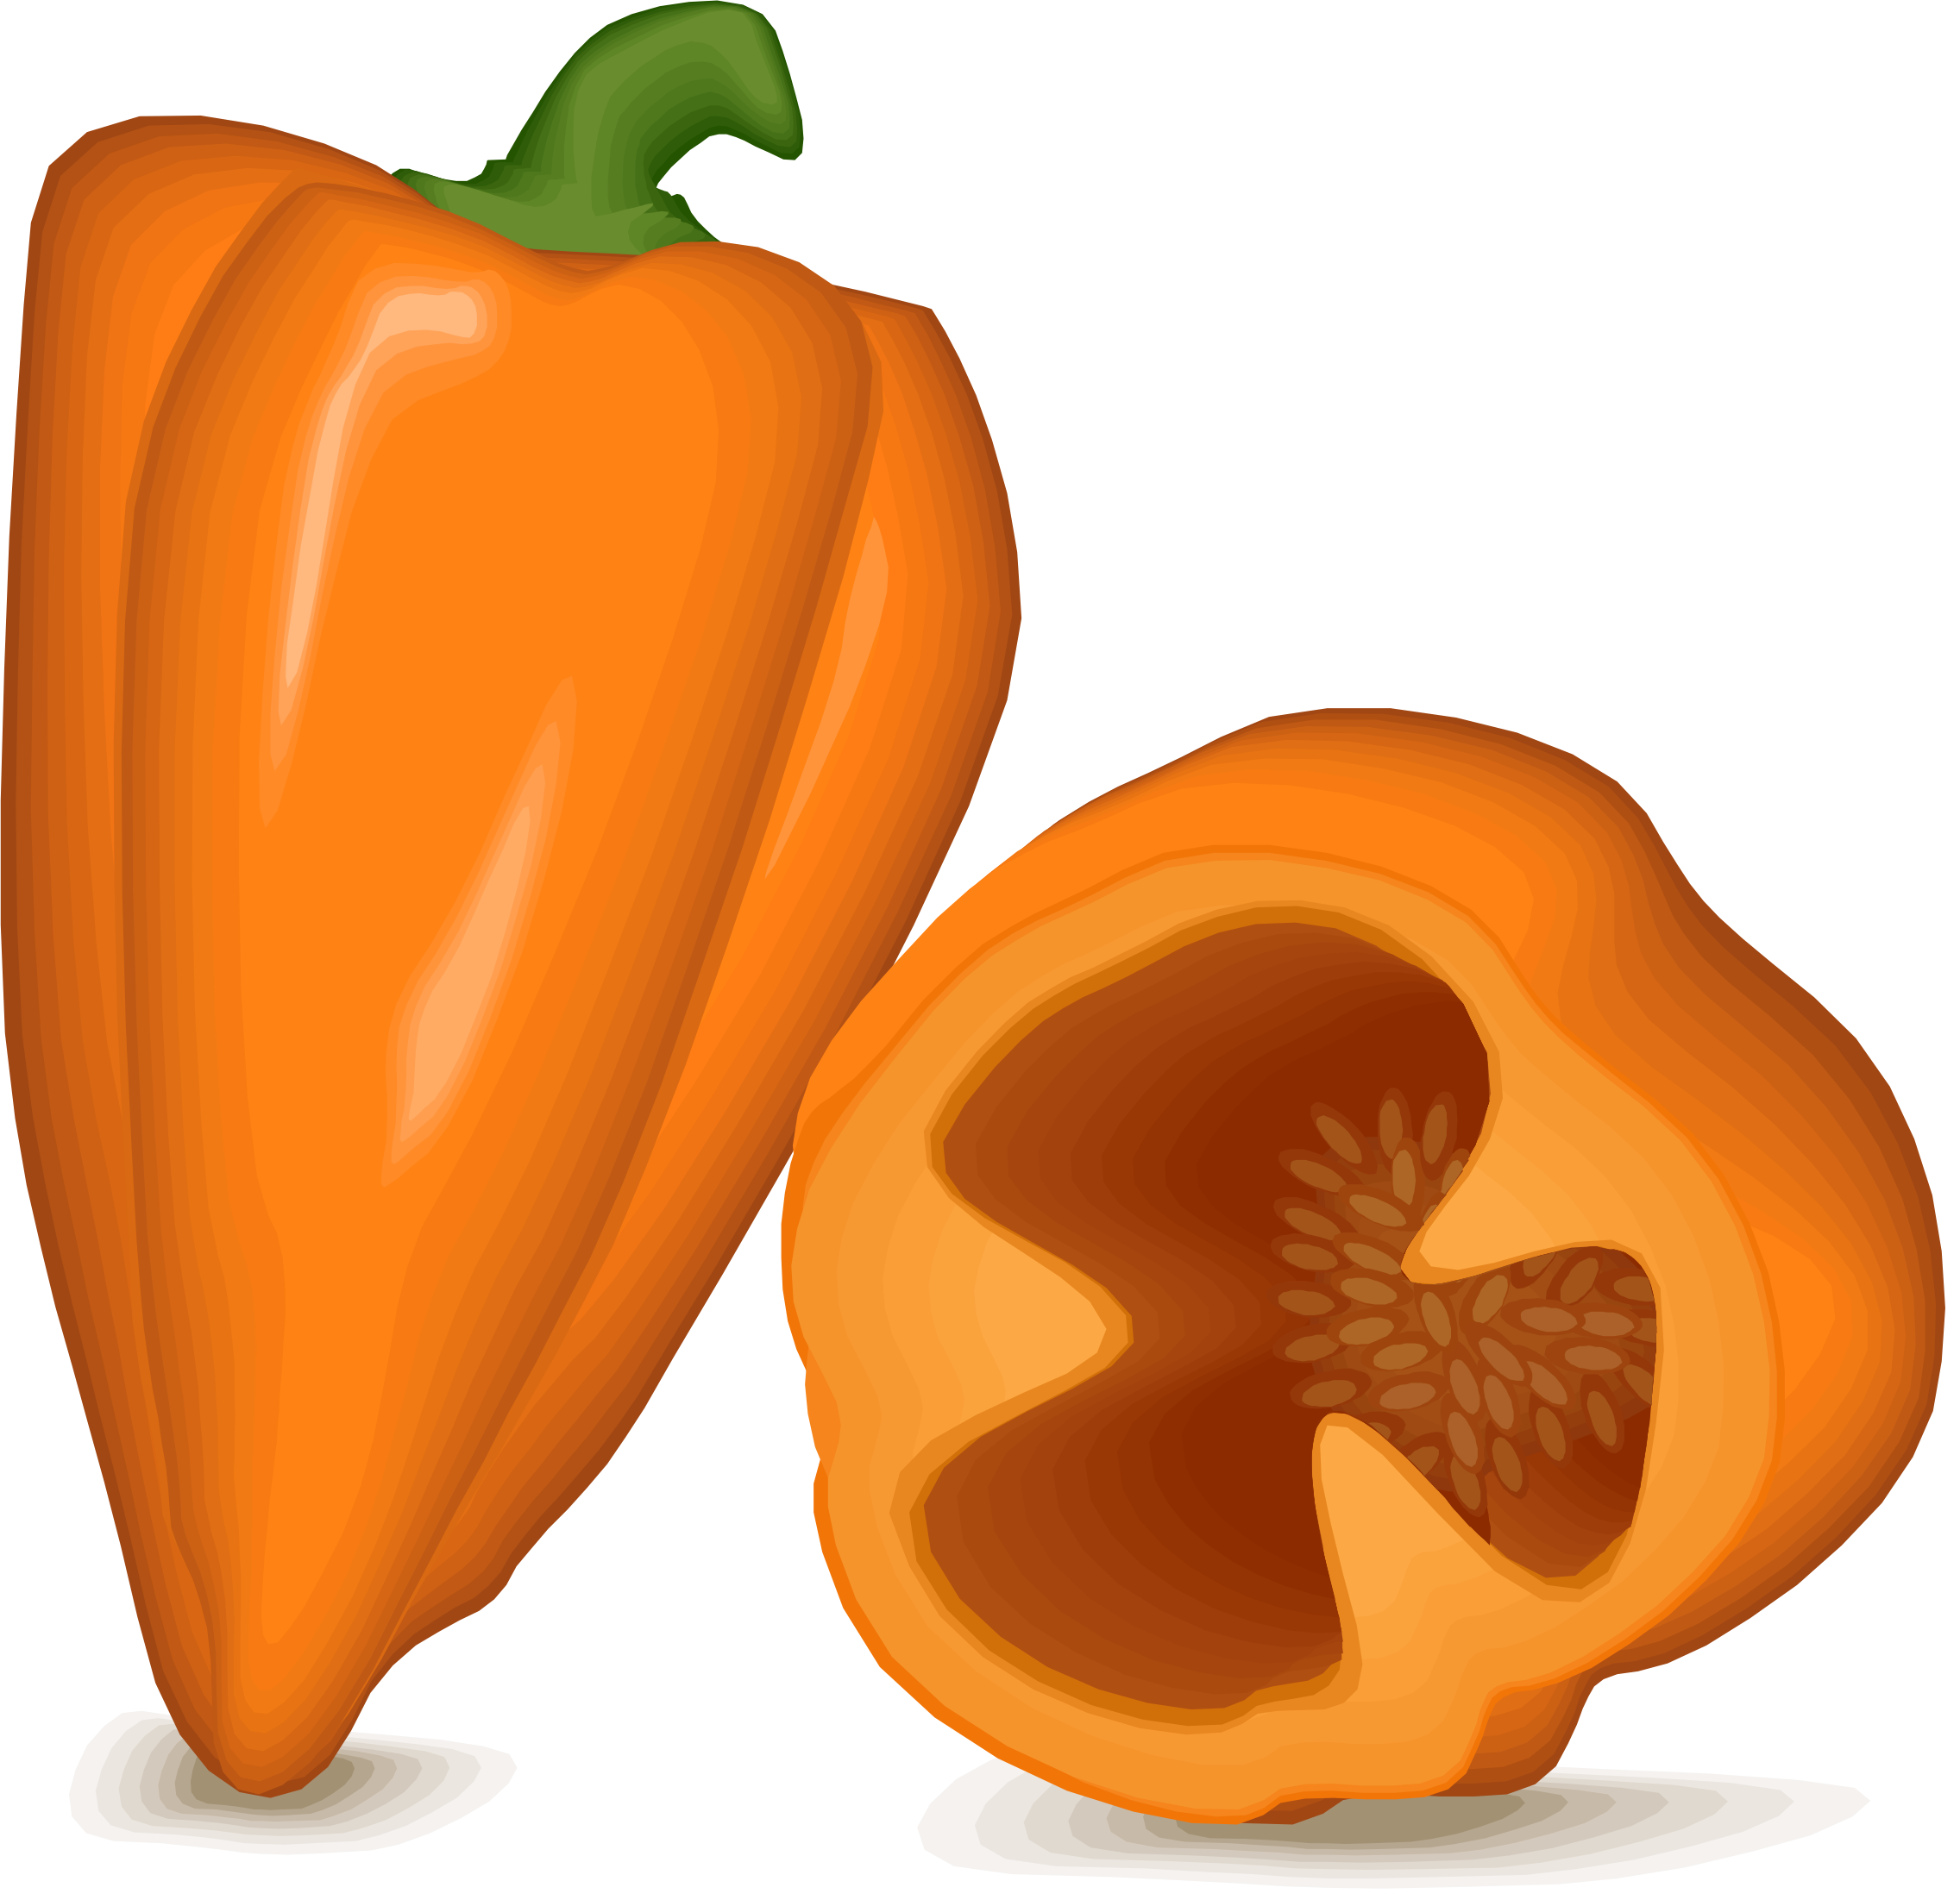 Pepper clipart 3 orange. Habanero big image png